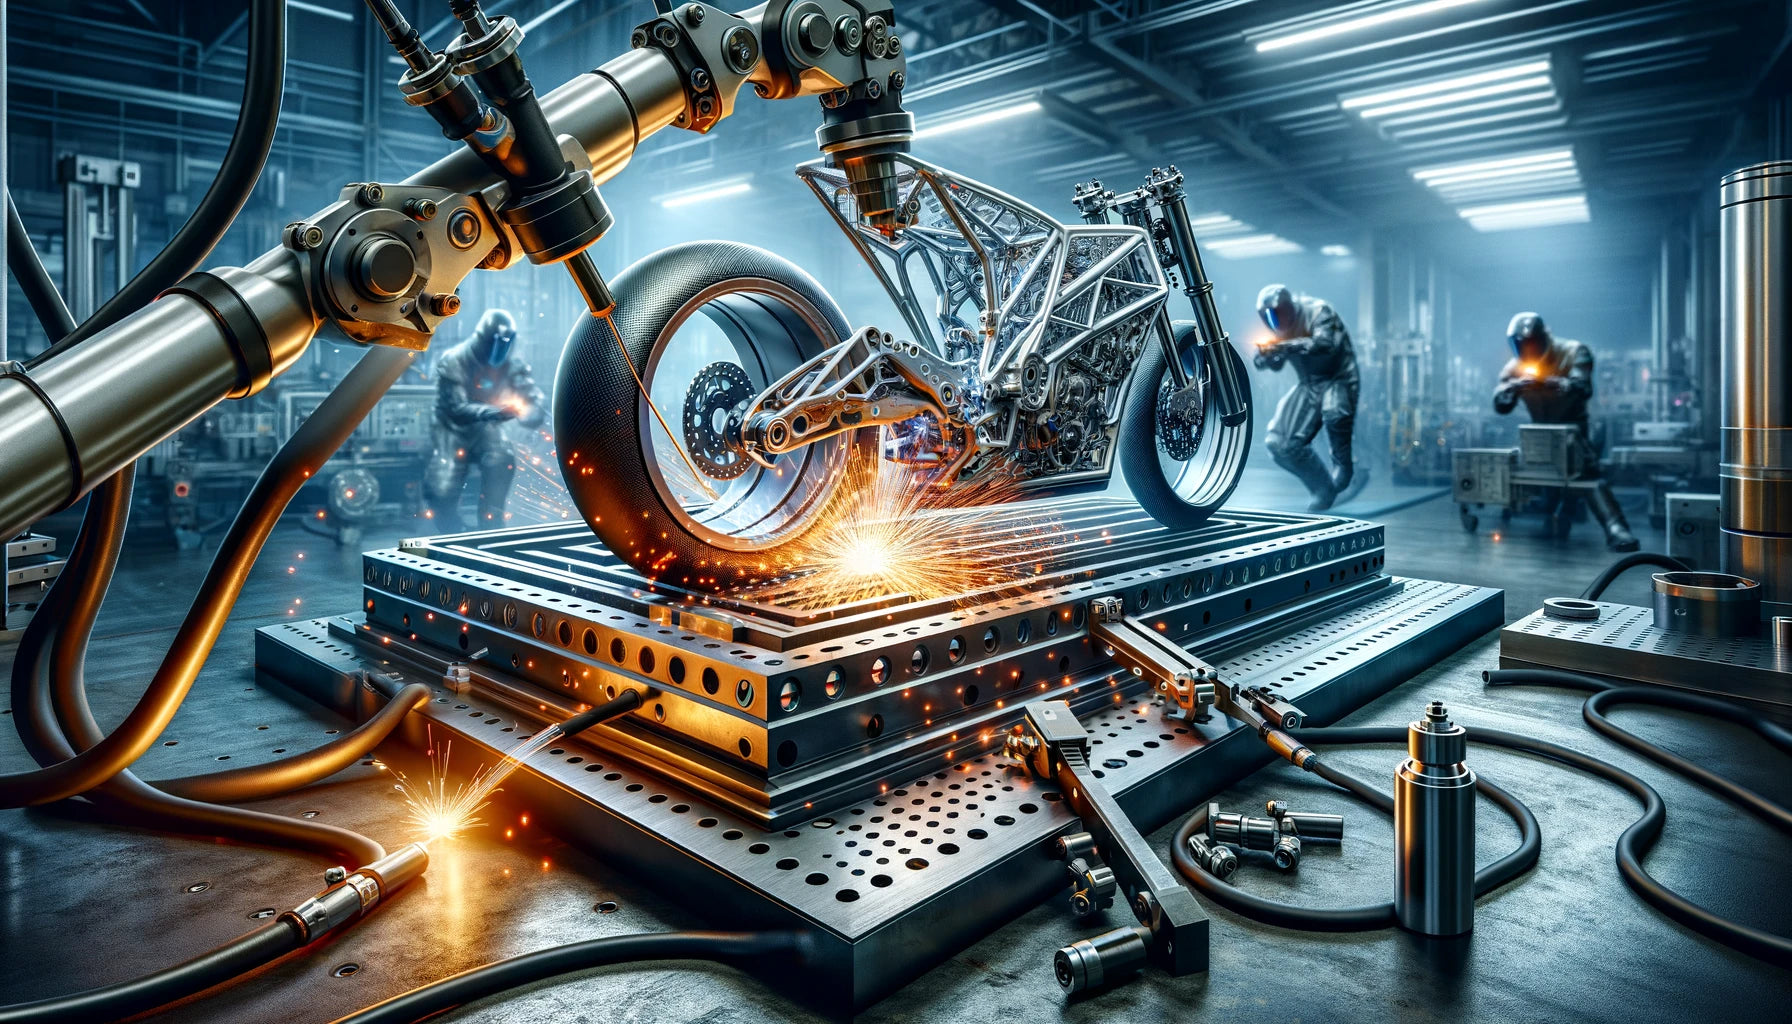 Motorcycle Tubular frame welding fixture with robot welding